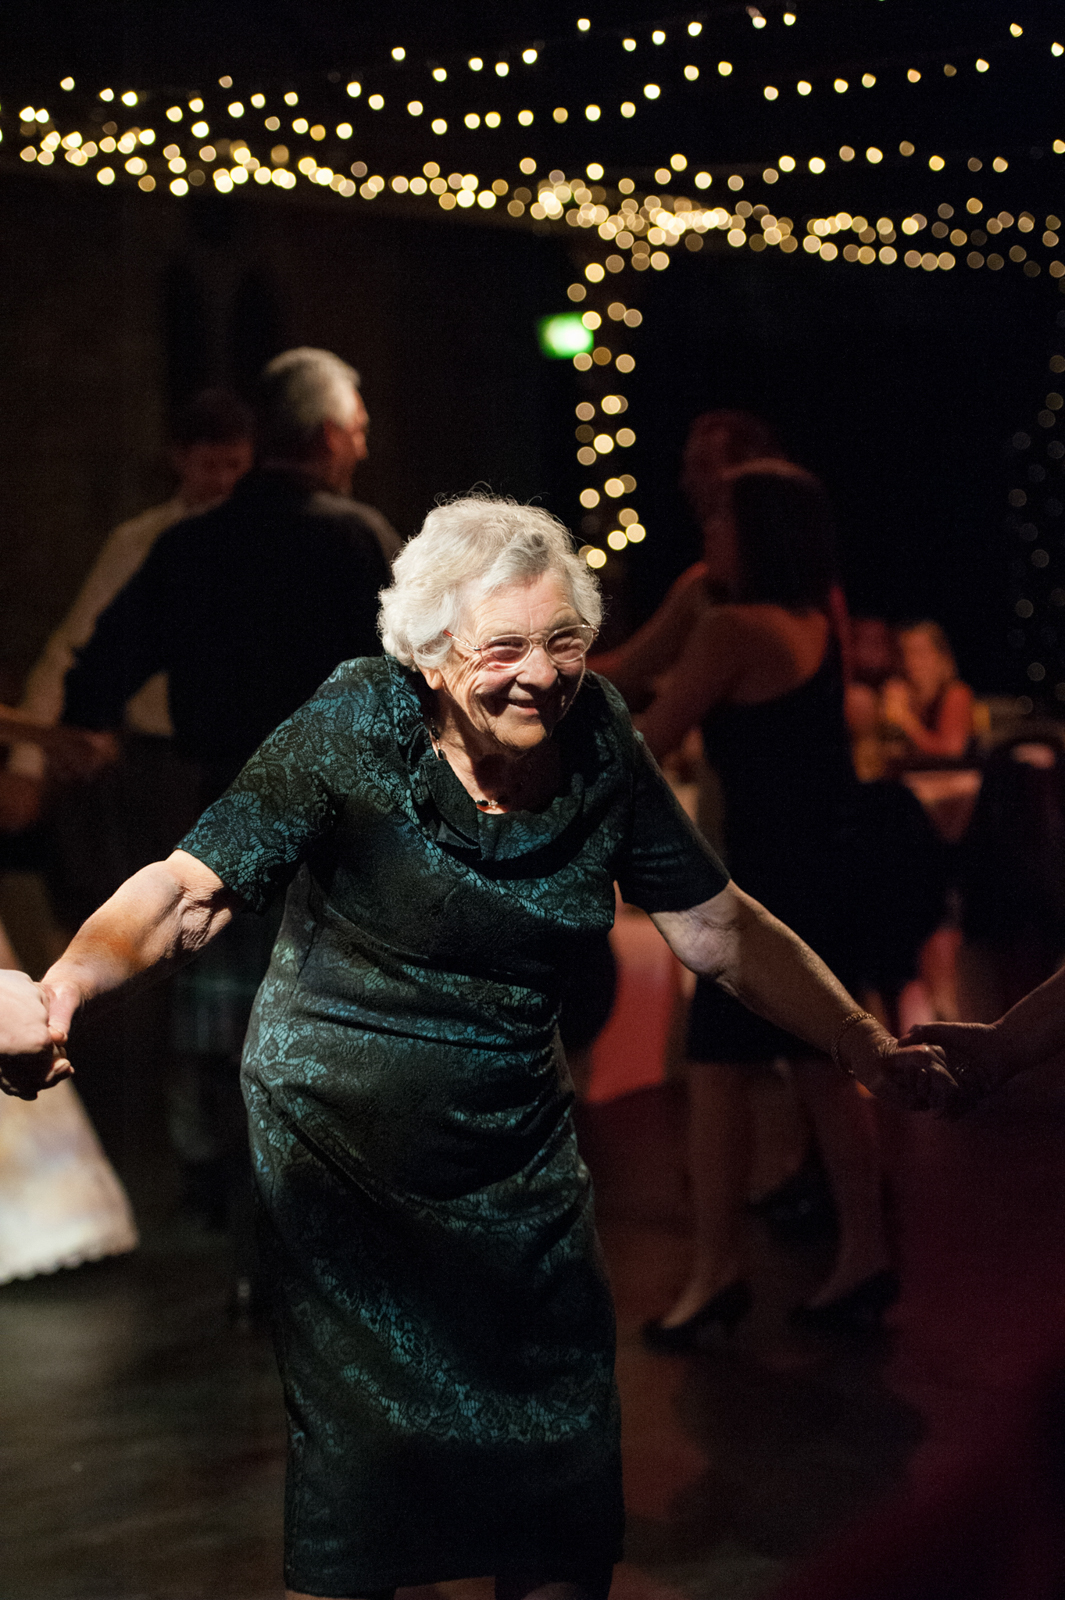 dancing-wedding-granny-cottiers-glasgow.jpg